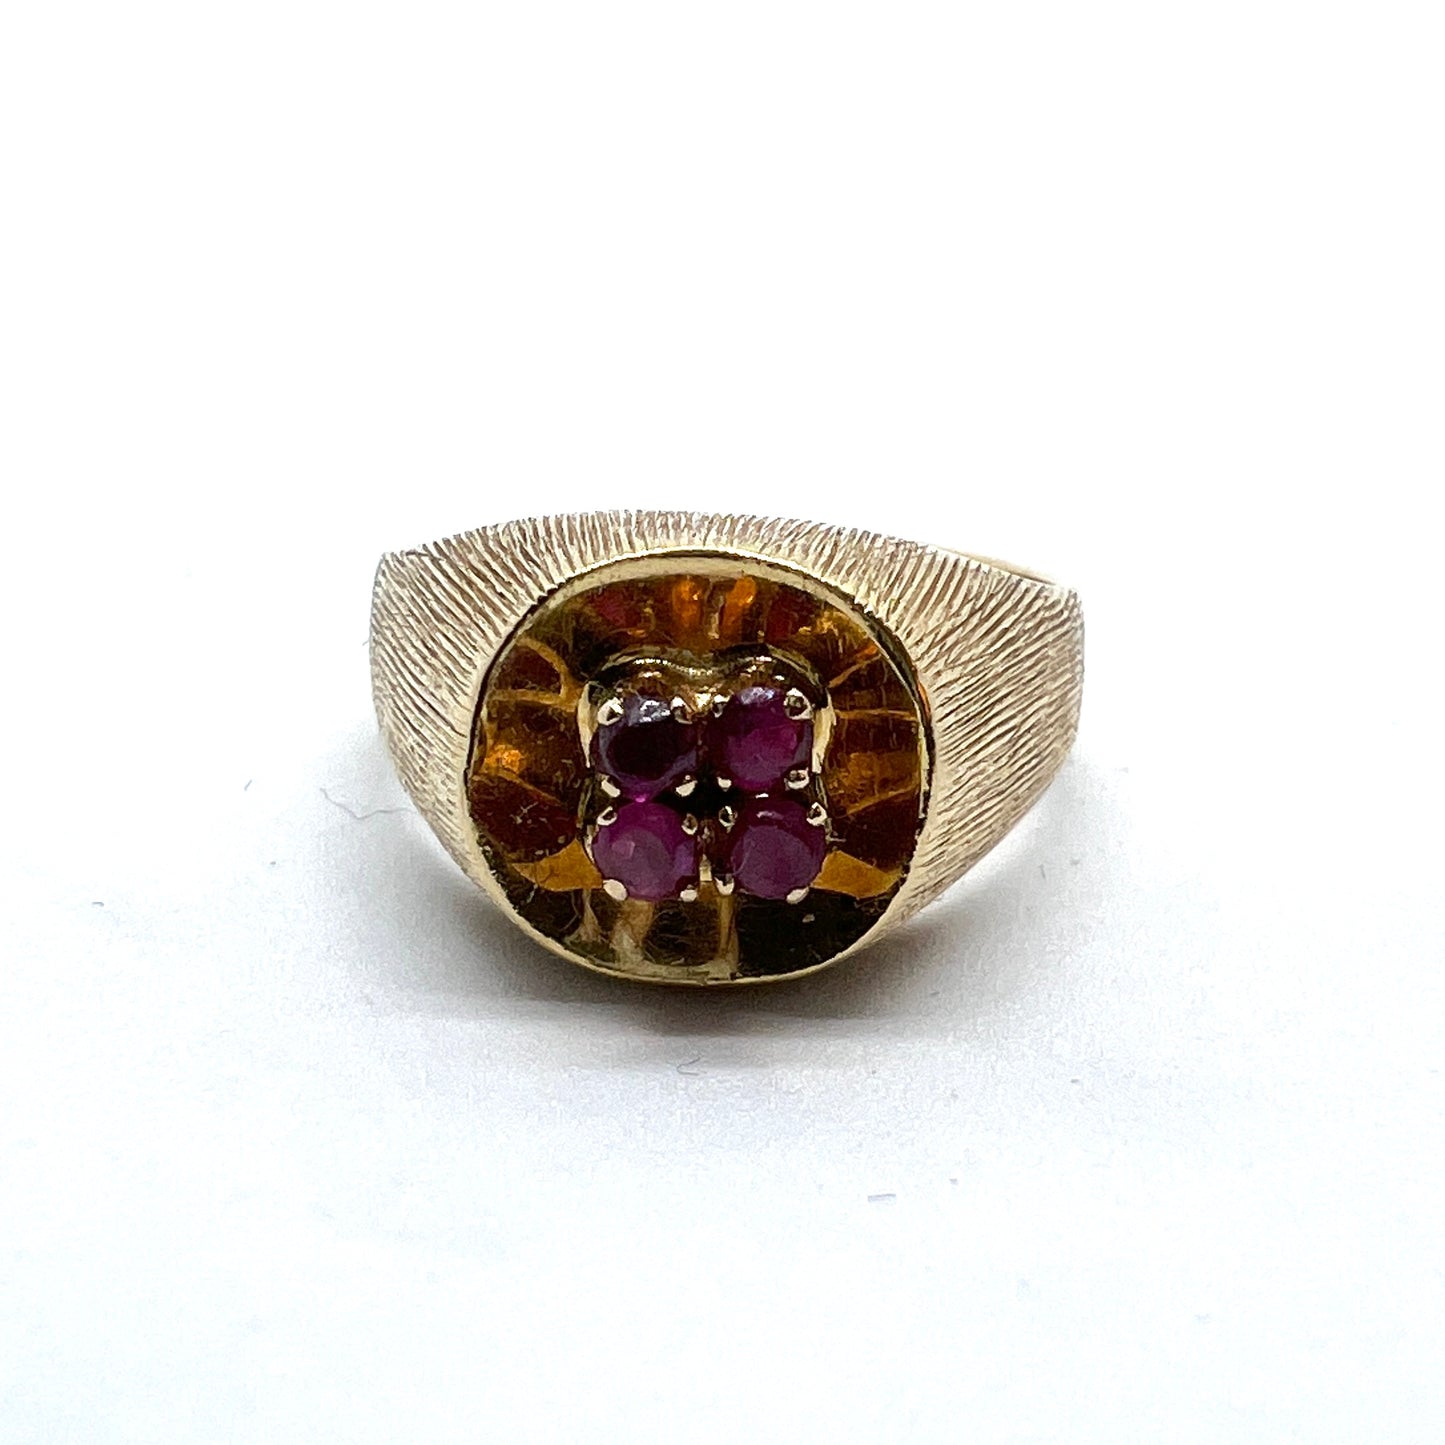 GARAVELLI ALDO, Italy c 1940s. Vintage 18k Gold Ruby Ring